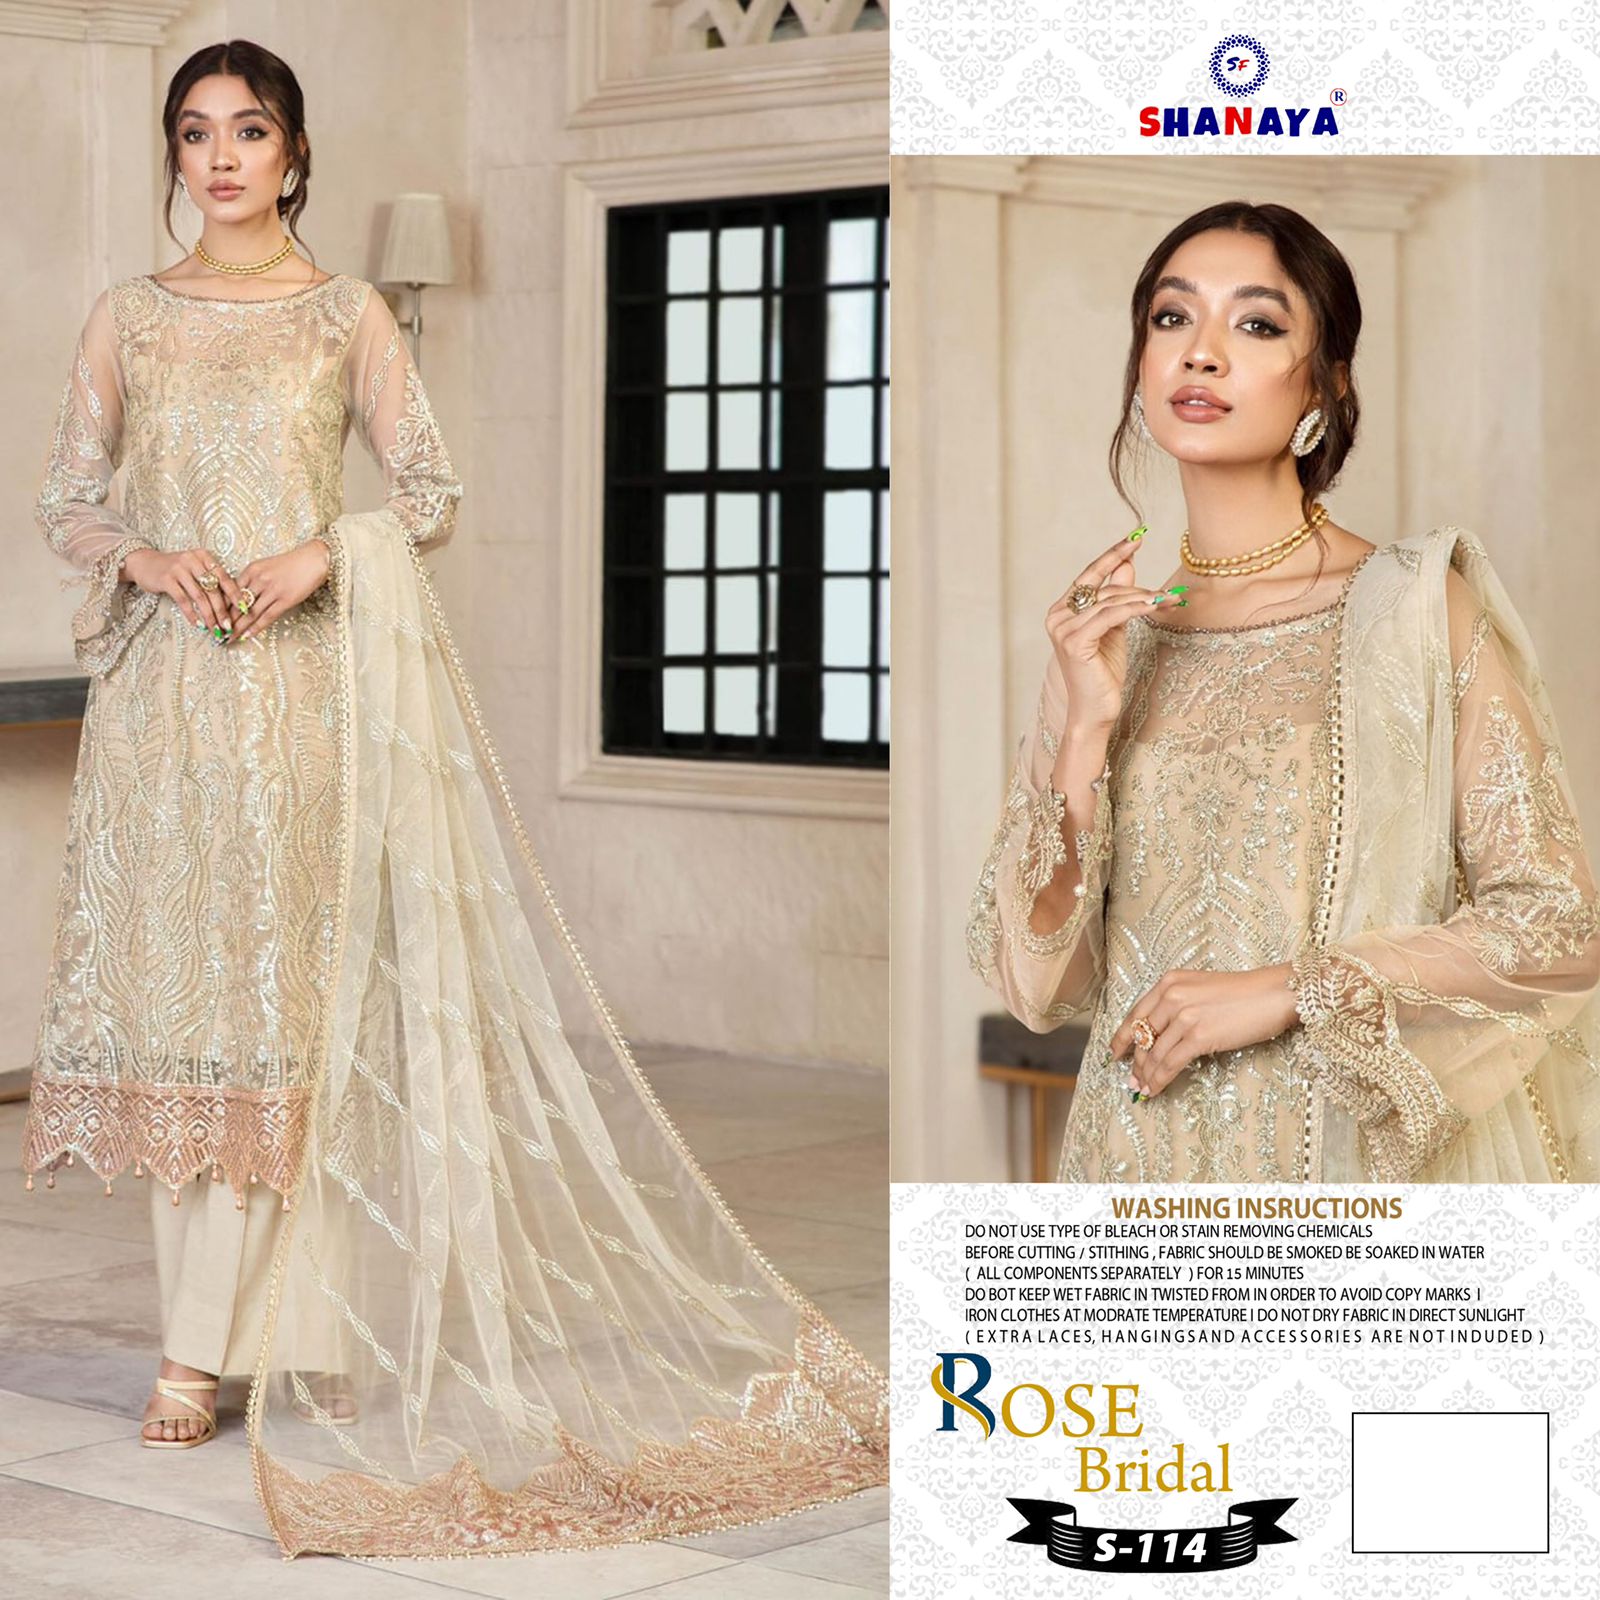 shanaya rose bridel s 114 net catchy look salwar suit single